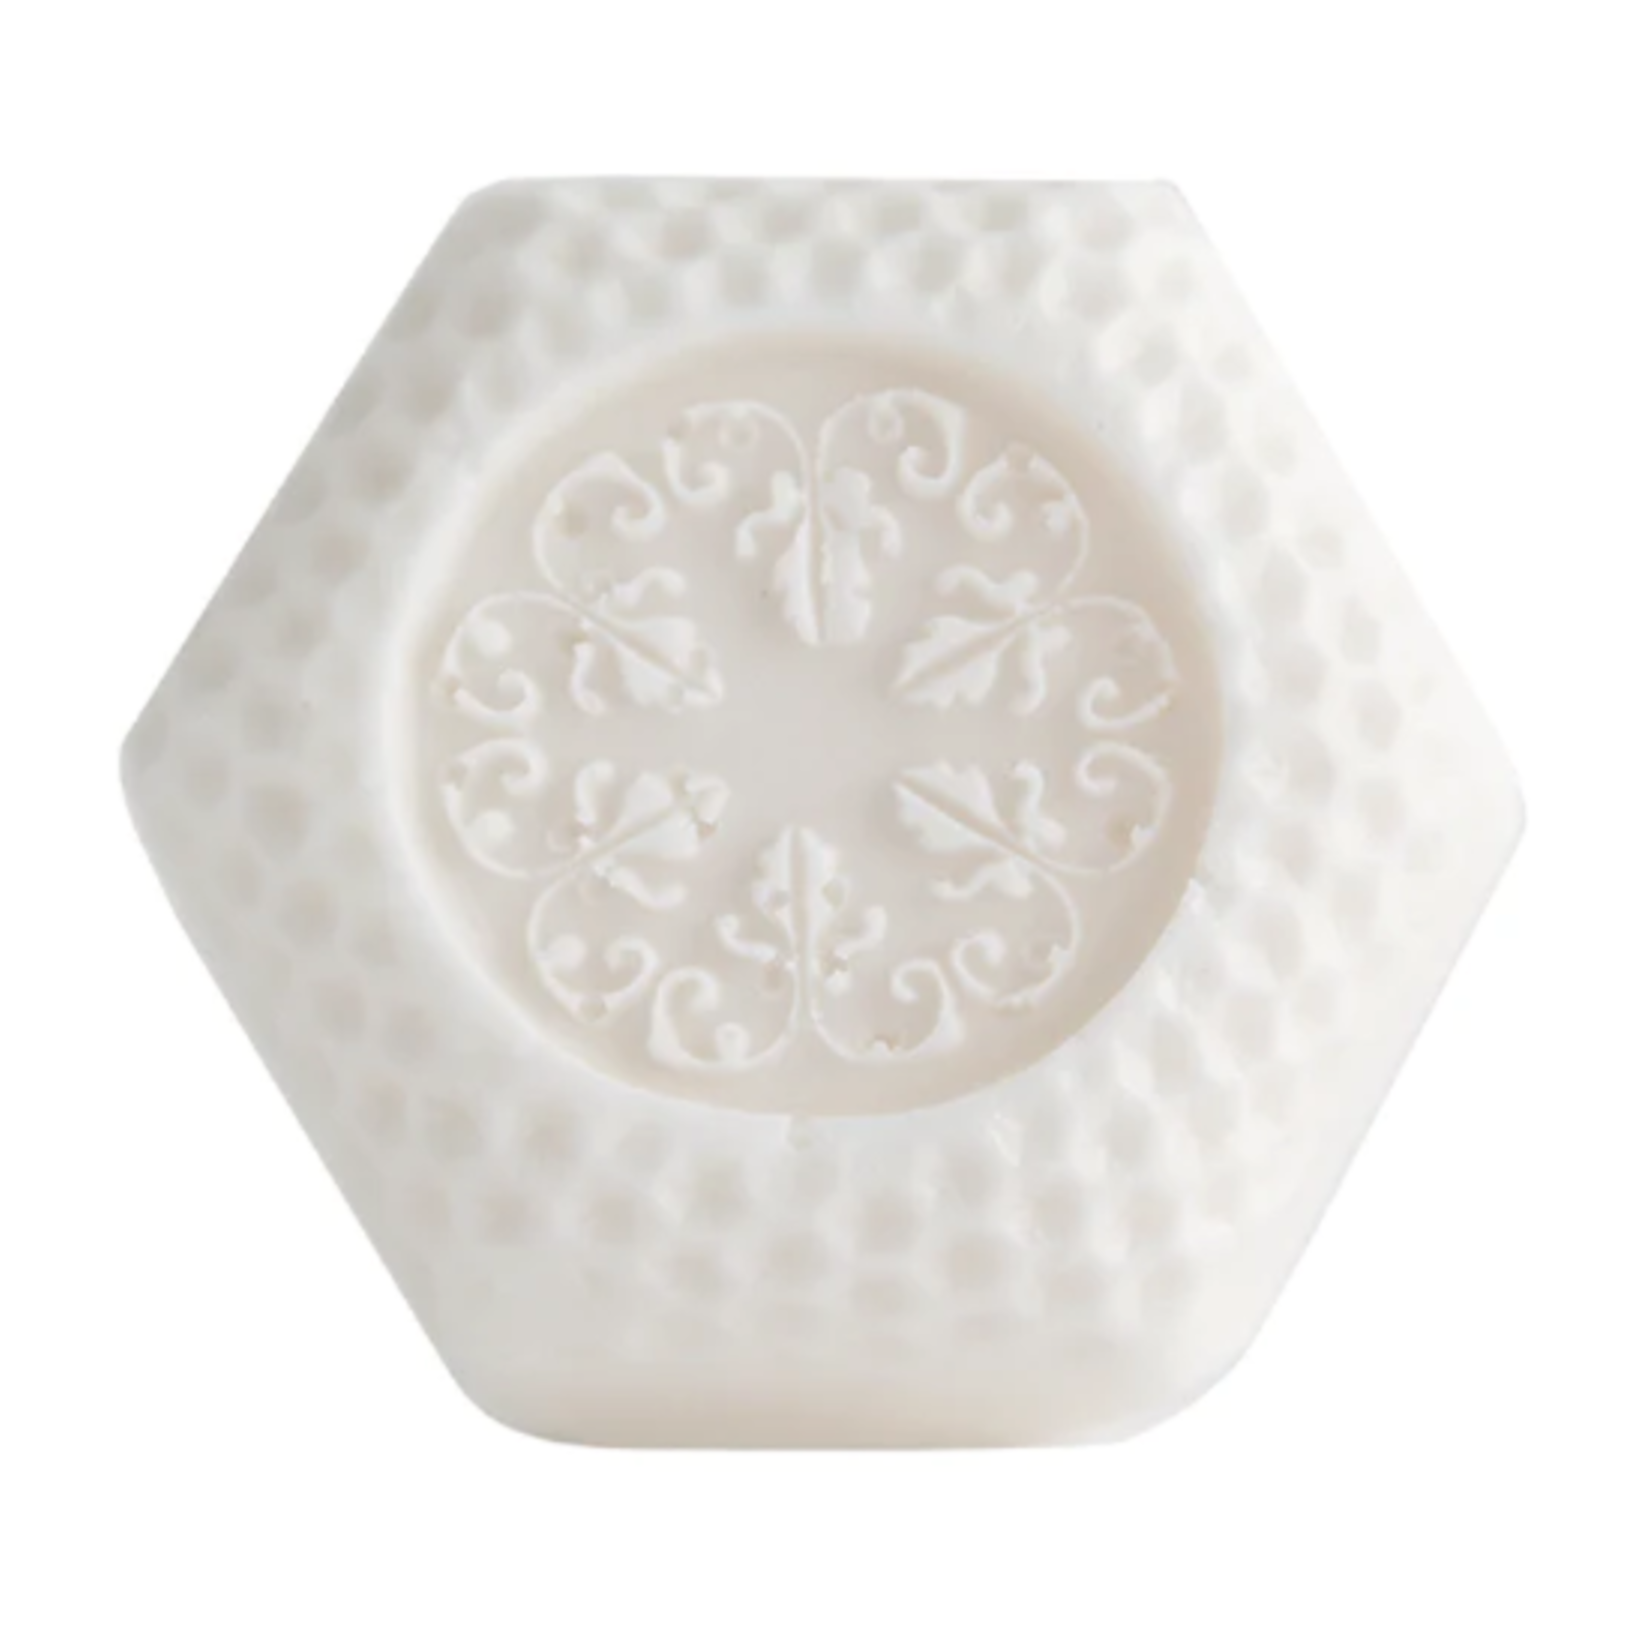 Lady Primrose Lady Primrose White Cream Soap